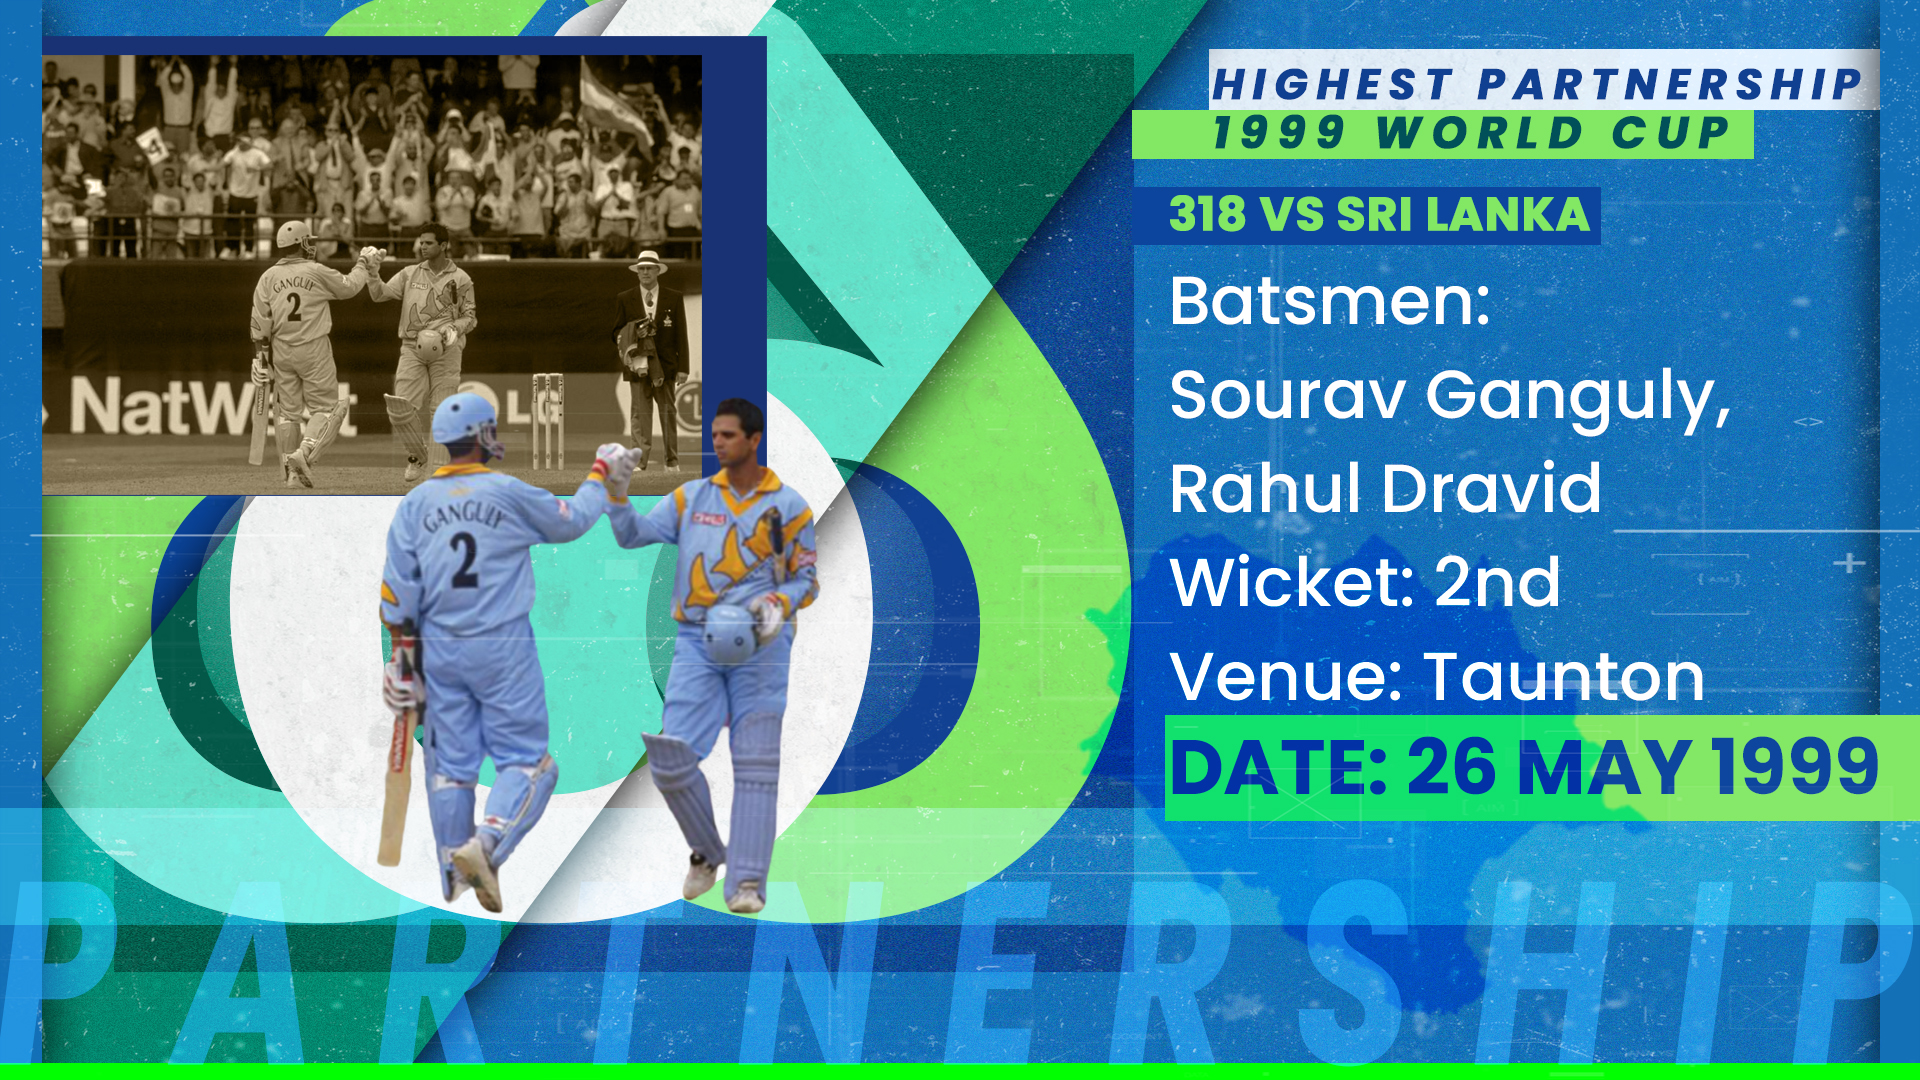 Sourav Ganguly and Rahul Dravid built 318 runs partnership against Sri Lanka for the second wicket.